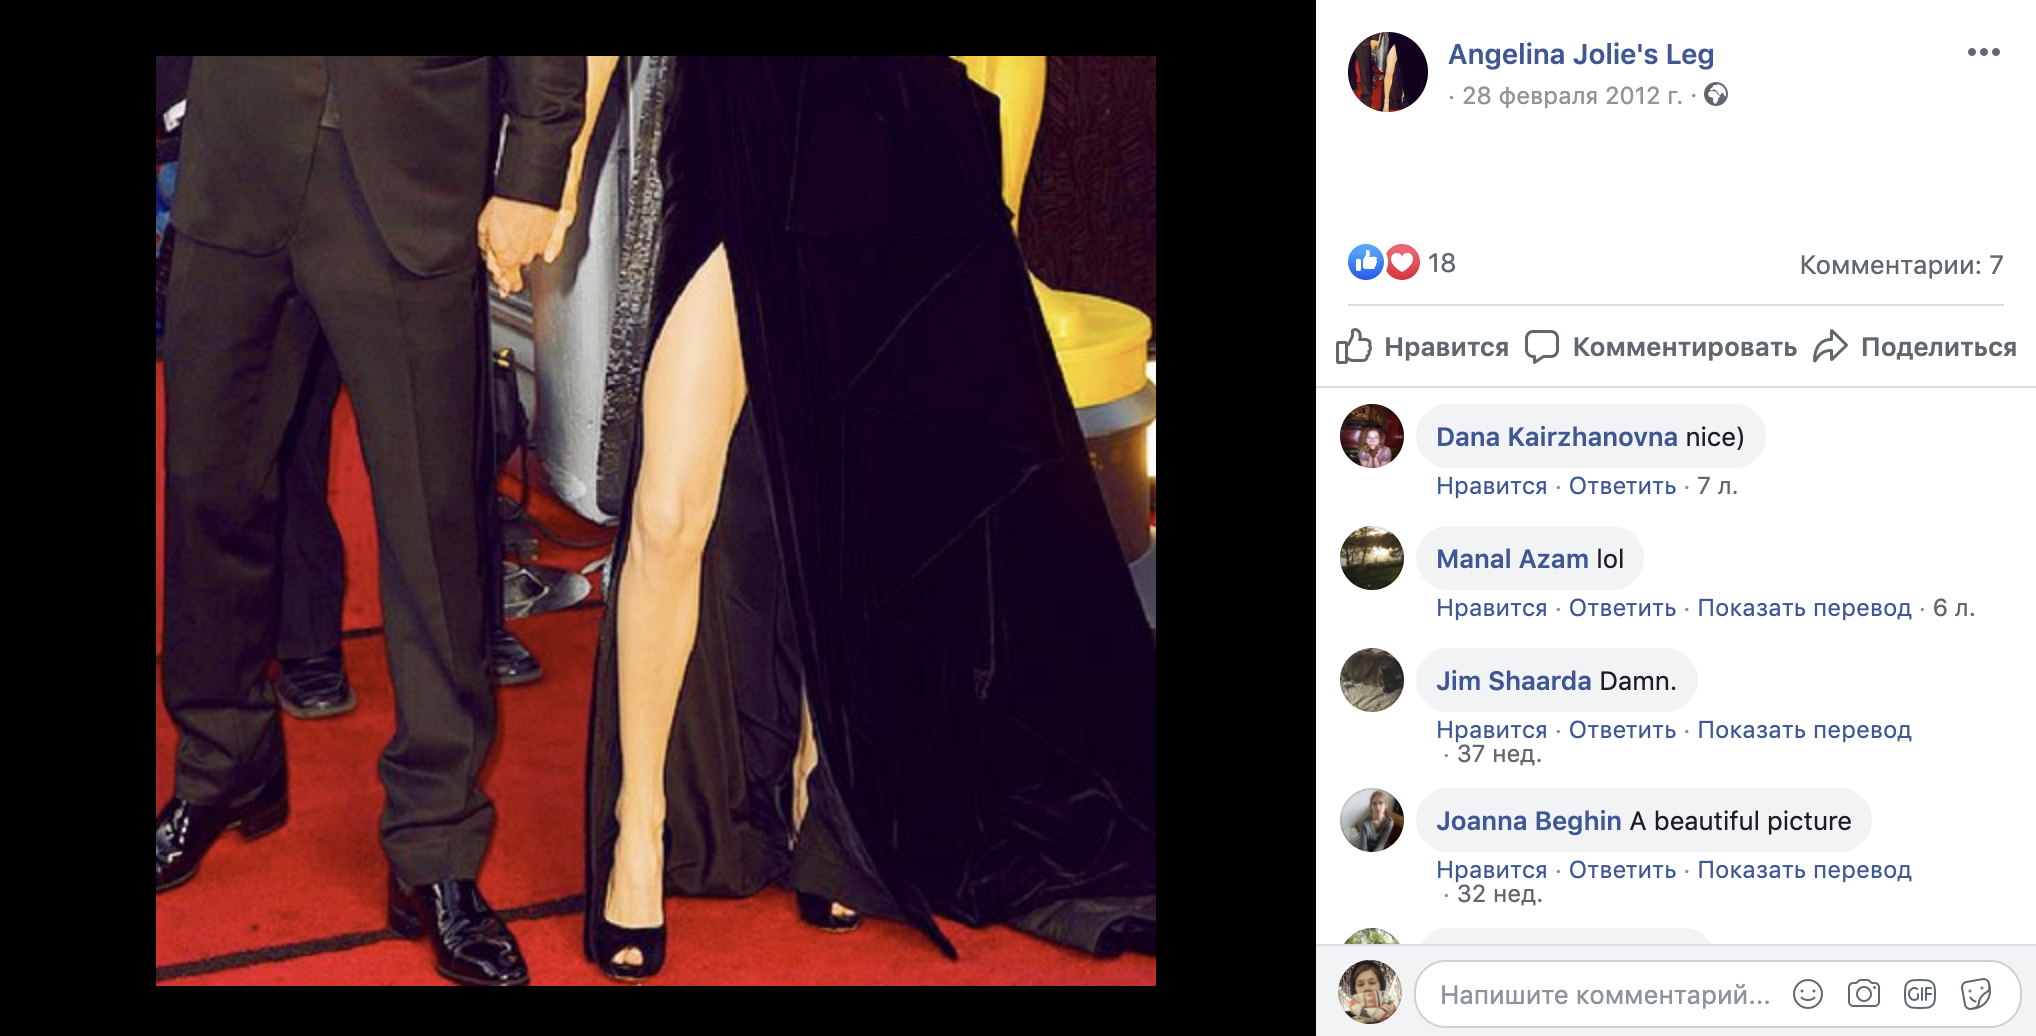 Фото: Angelina Jolie's Leg/Facebook